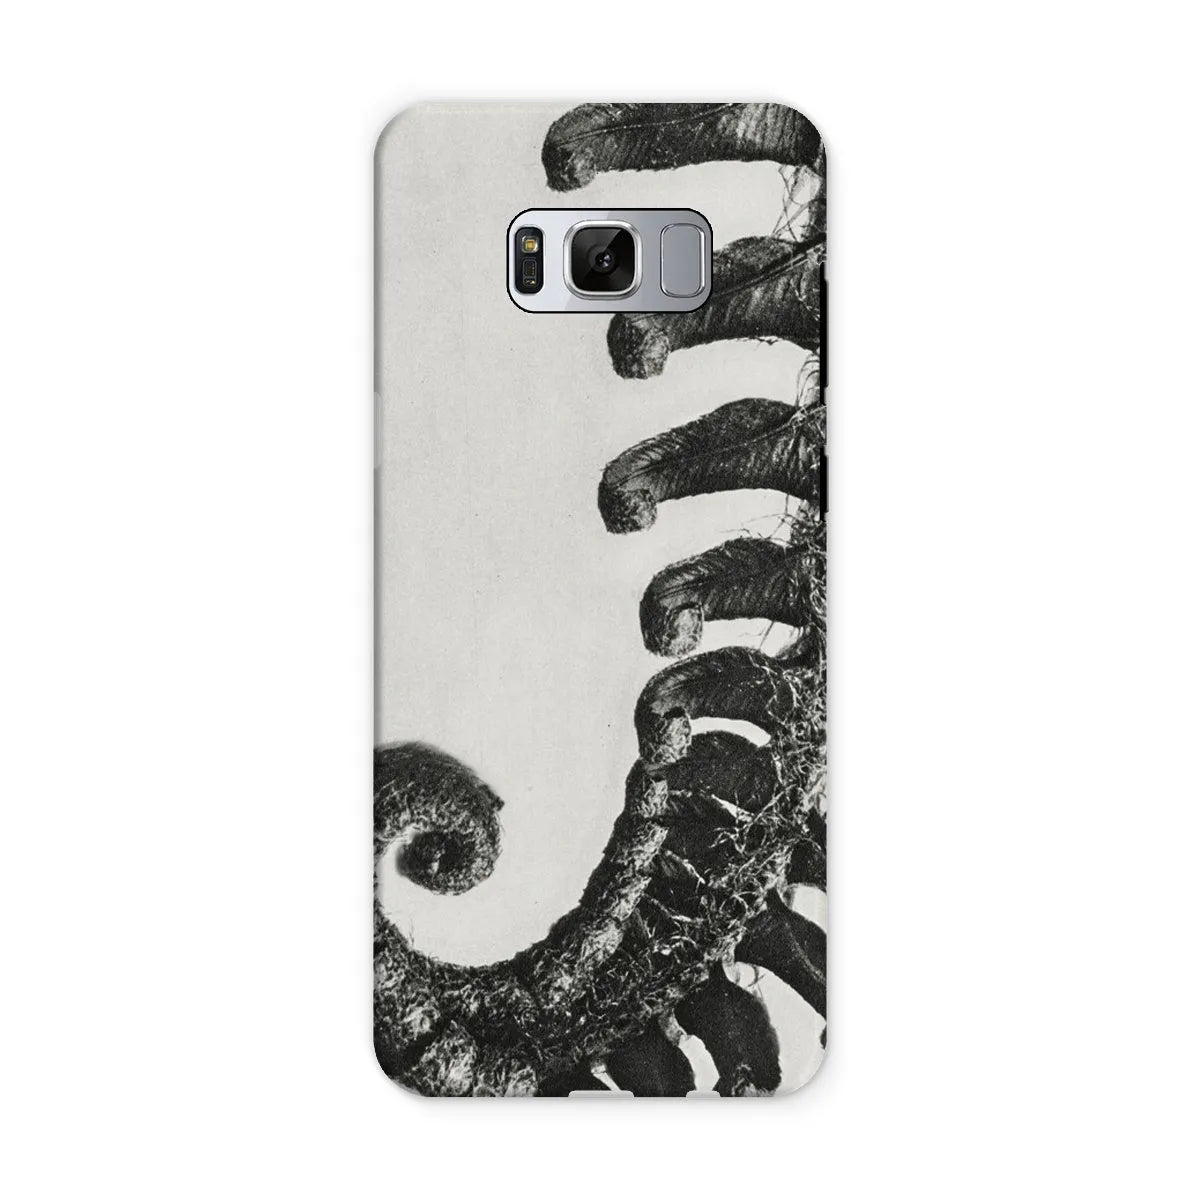 Polystichum Munitum (prickly Shield–fern) By Karl Blossfeldt Tough Phone Case - Samsung Galaxy S8 / Matte - Mobile